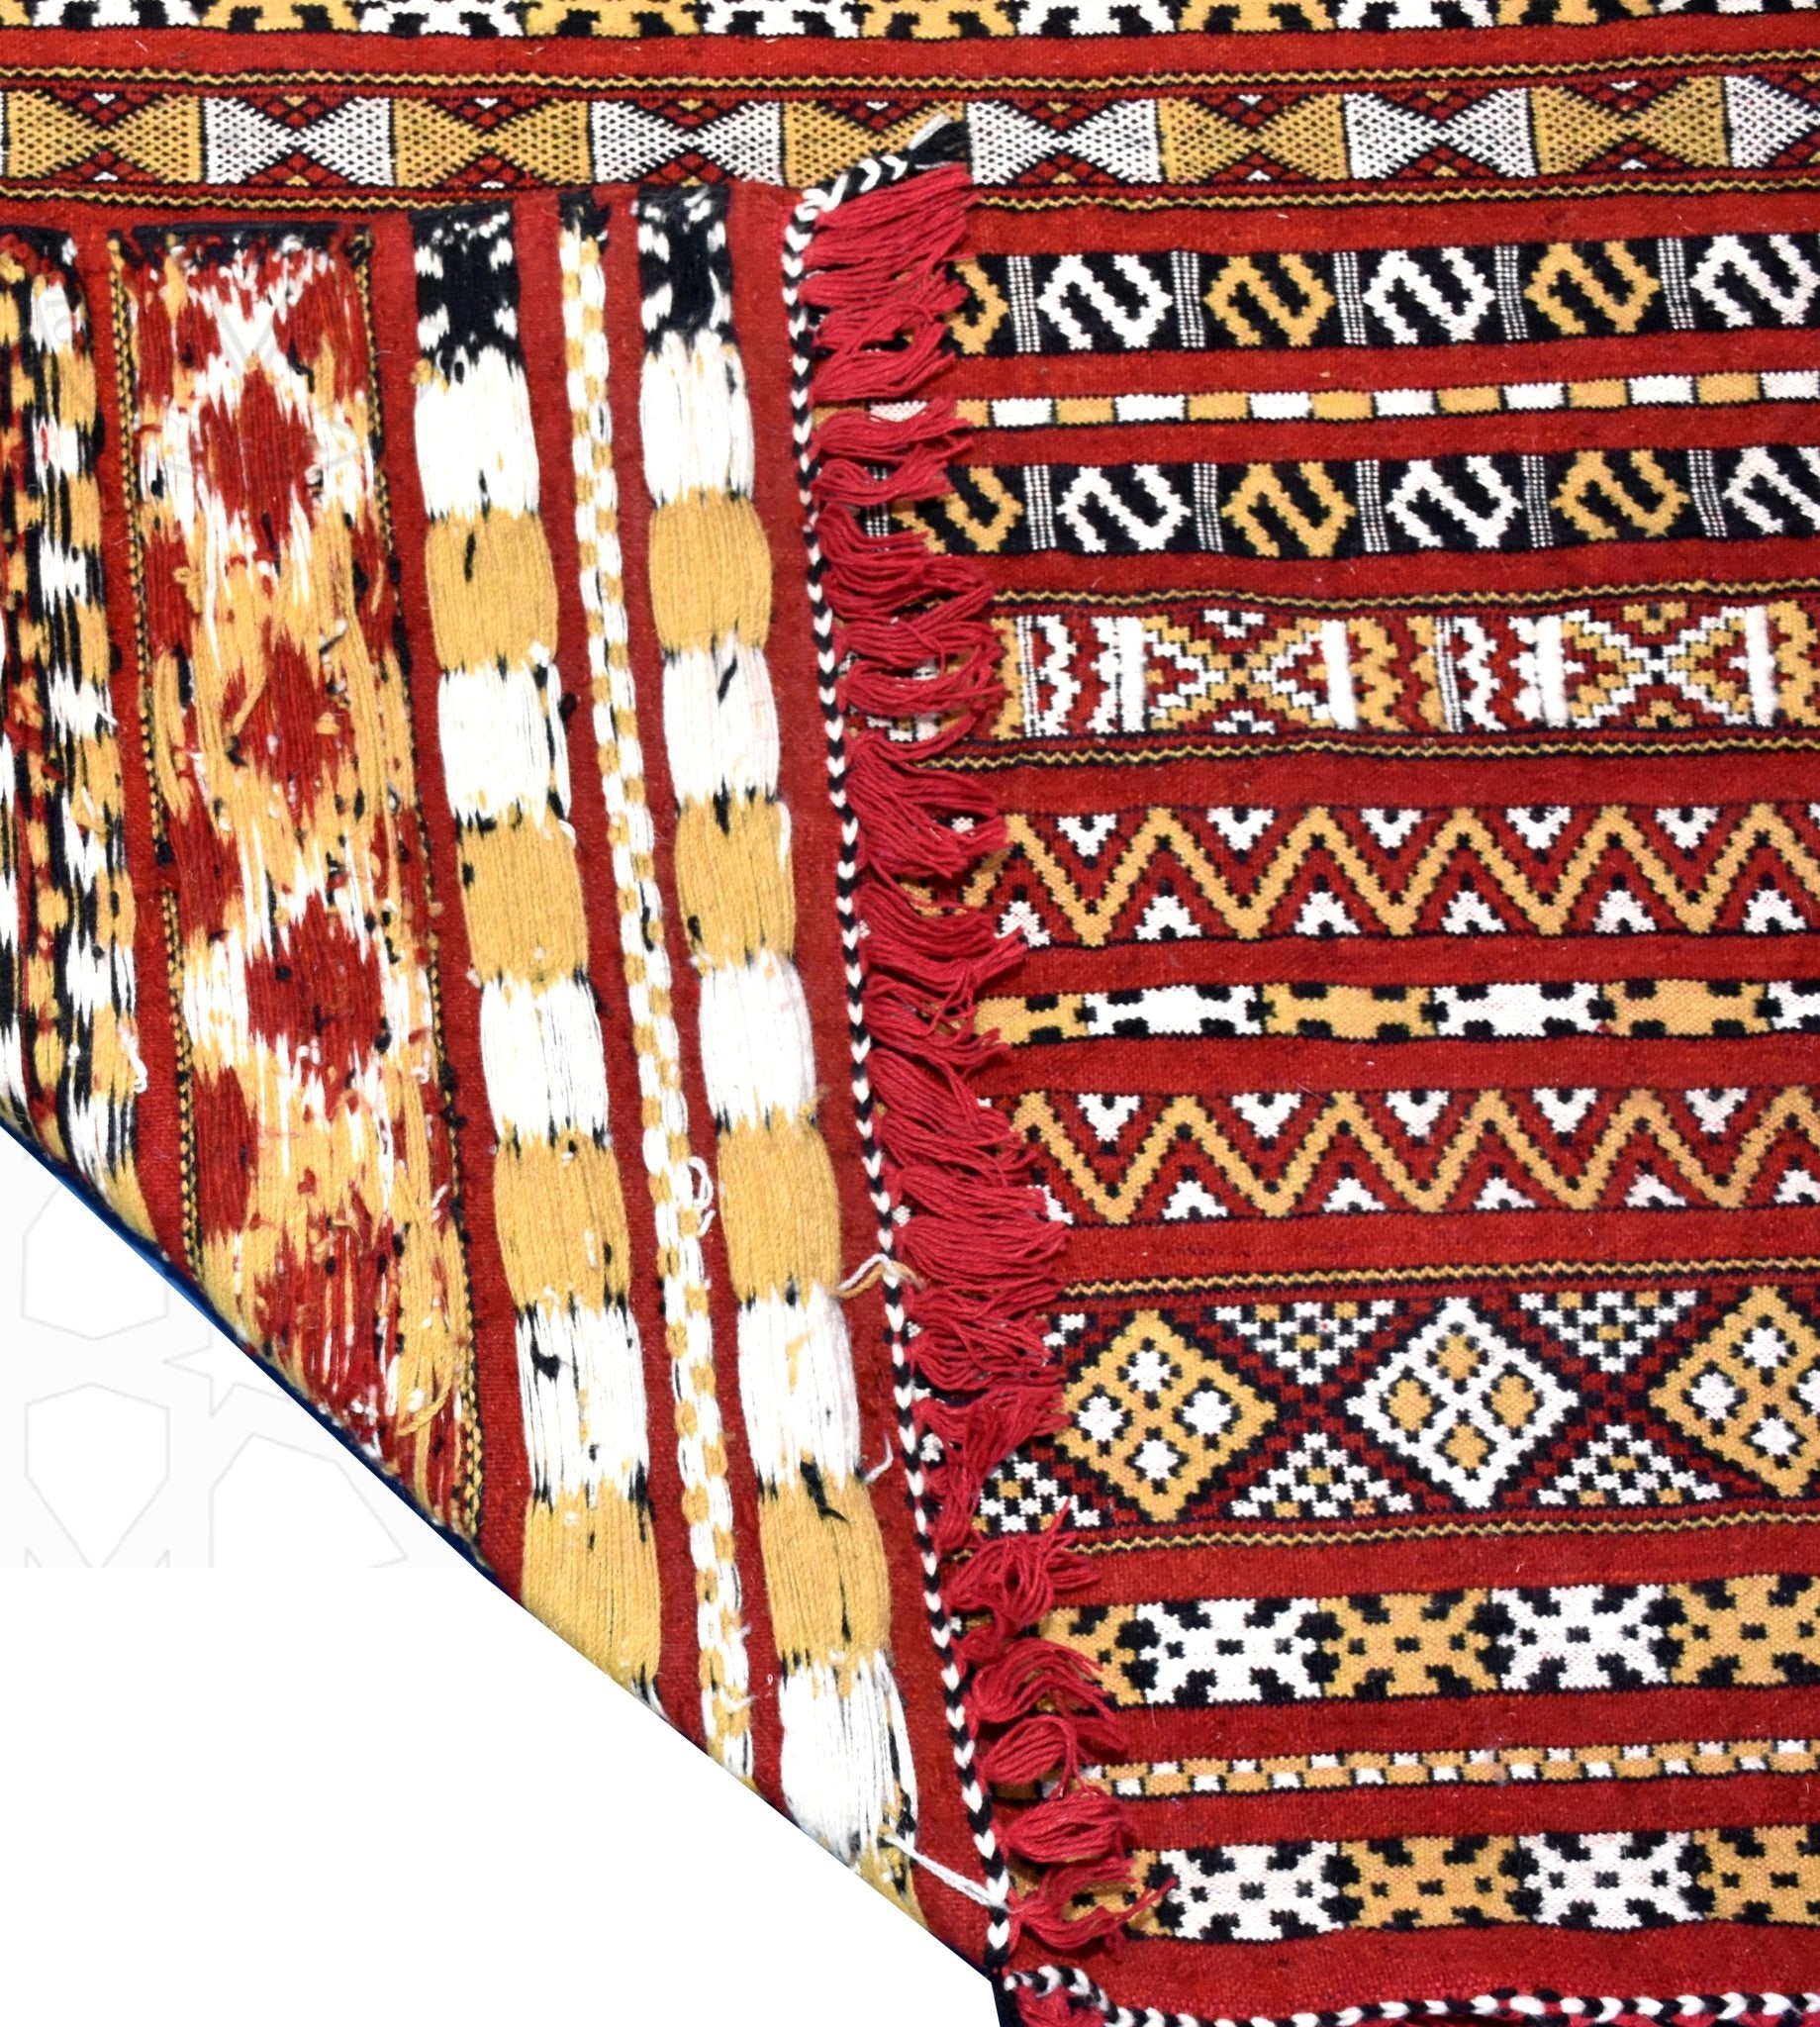 Flatweave kilim hanbal Moroccan rug - 4.6 x 7.06 ft / 140 x 215 cm - Berbers Market